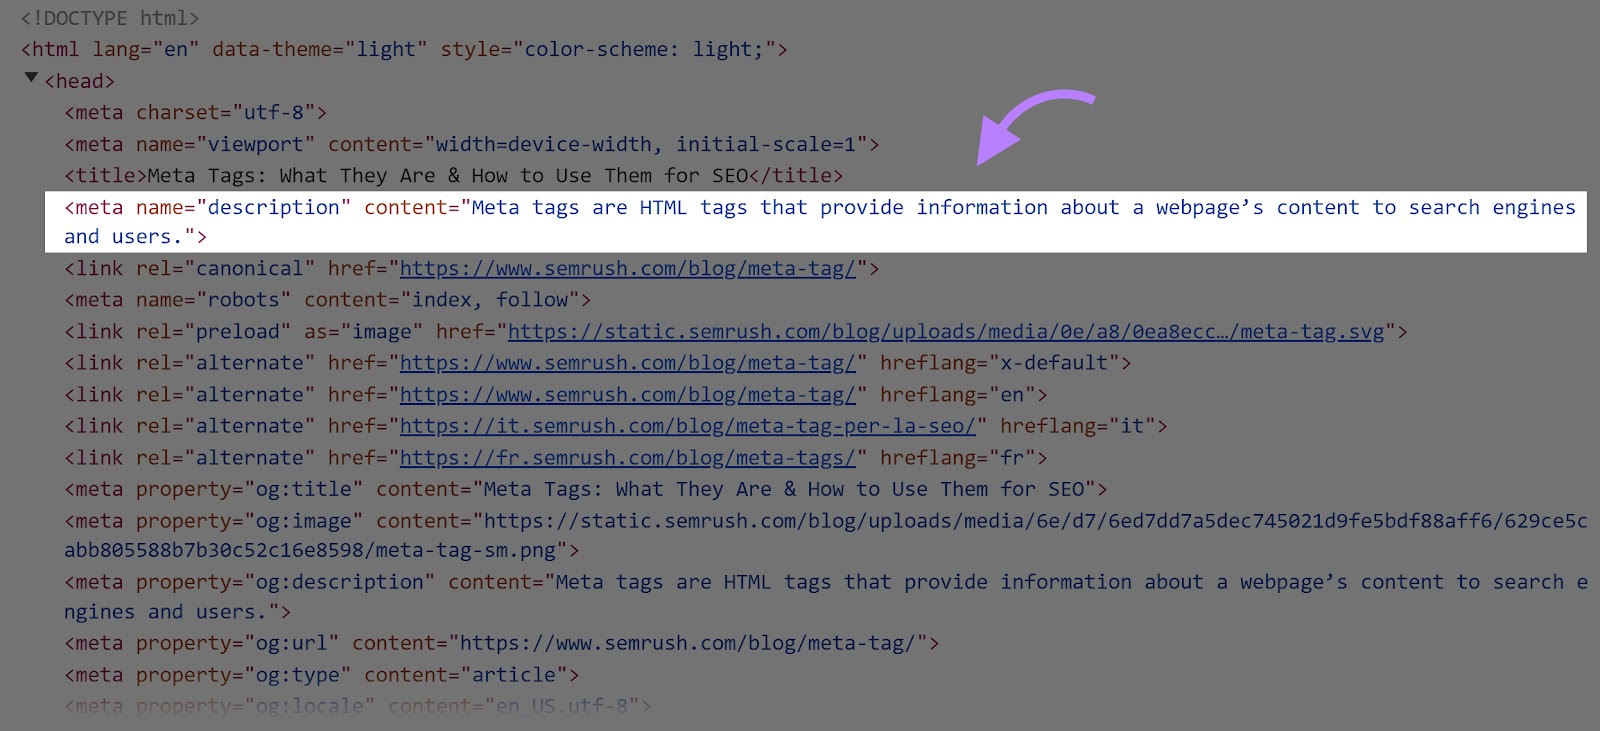 Meta description tag shown in the HTML code of a Semrush article.